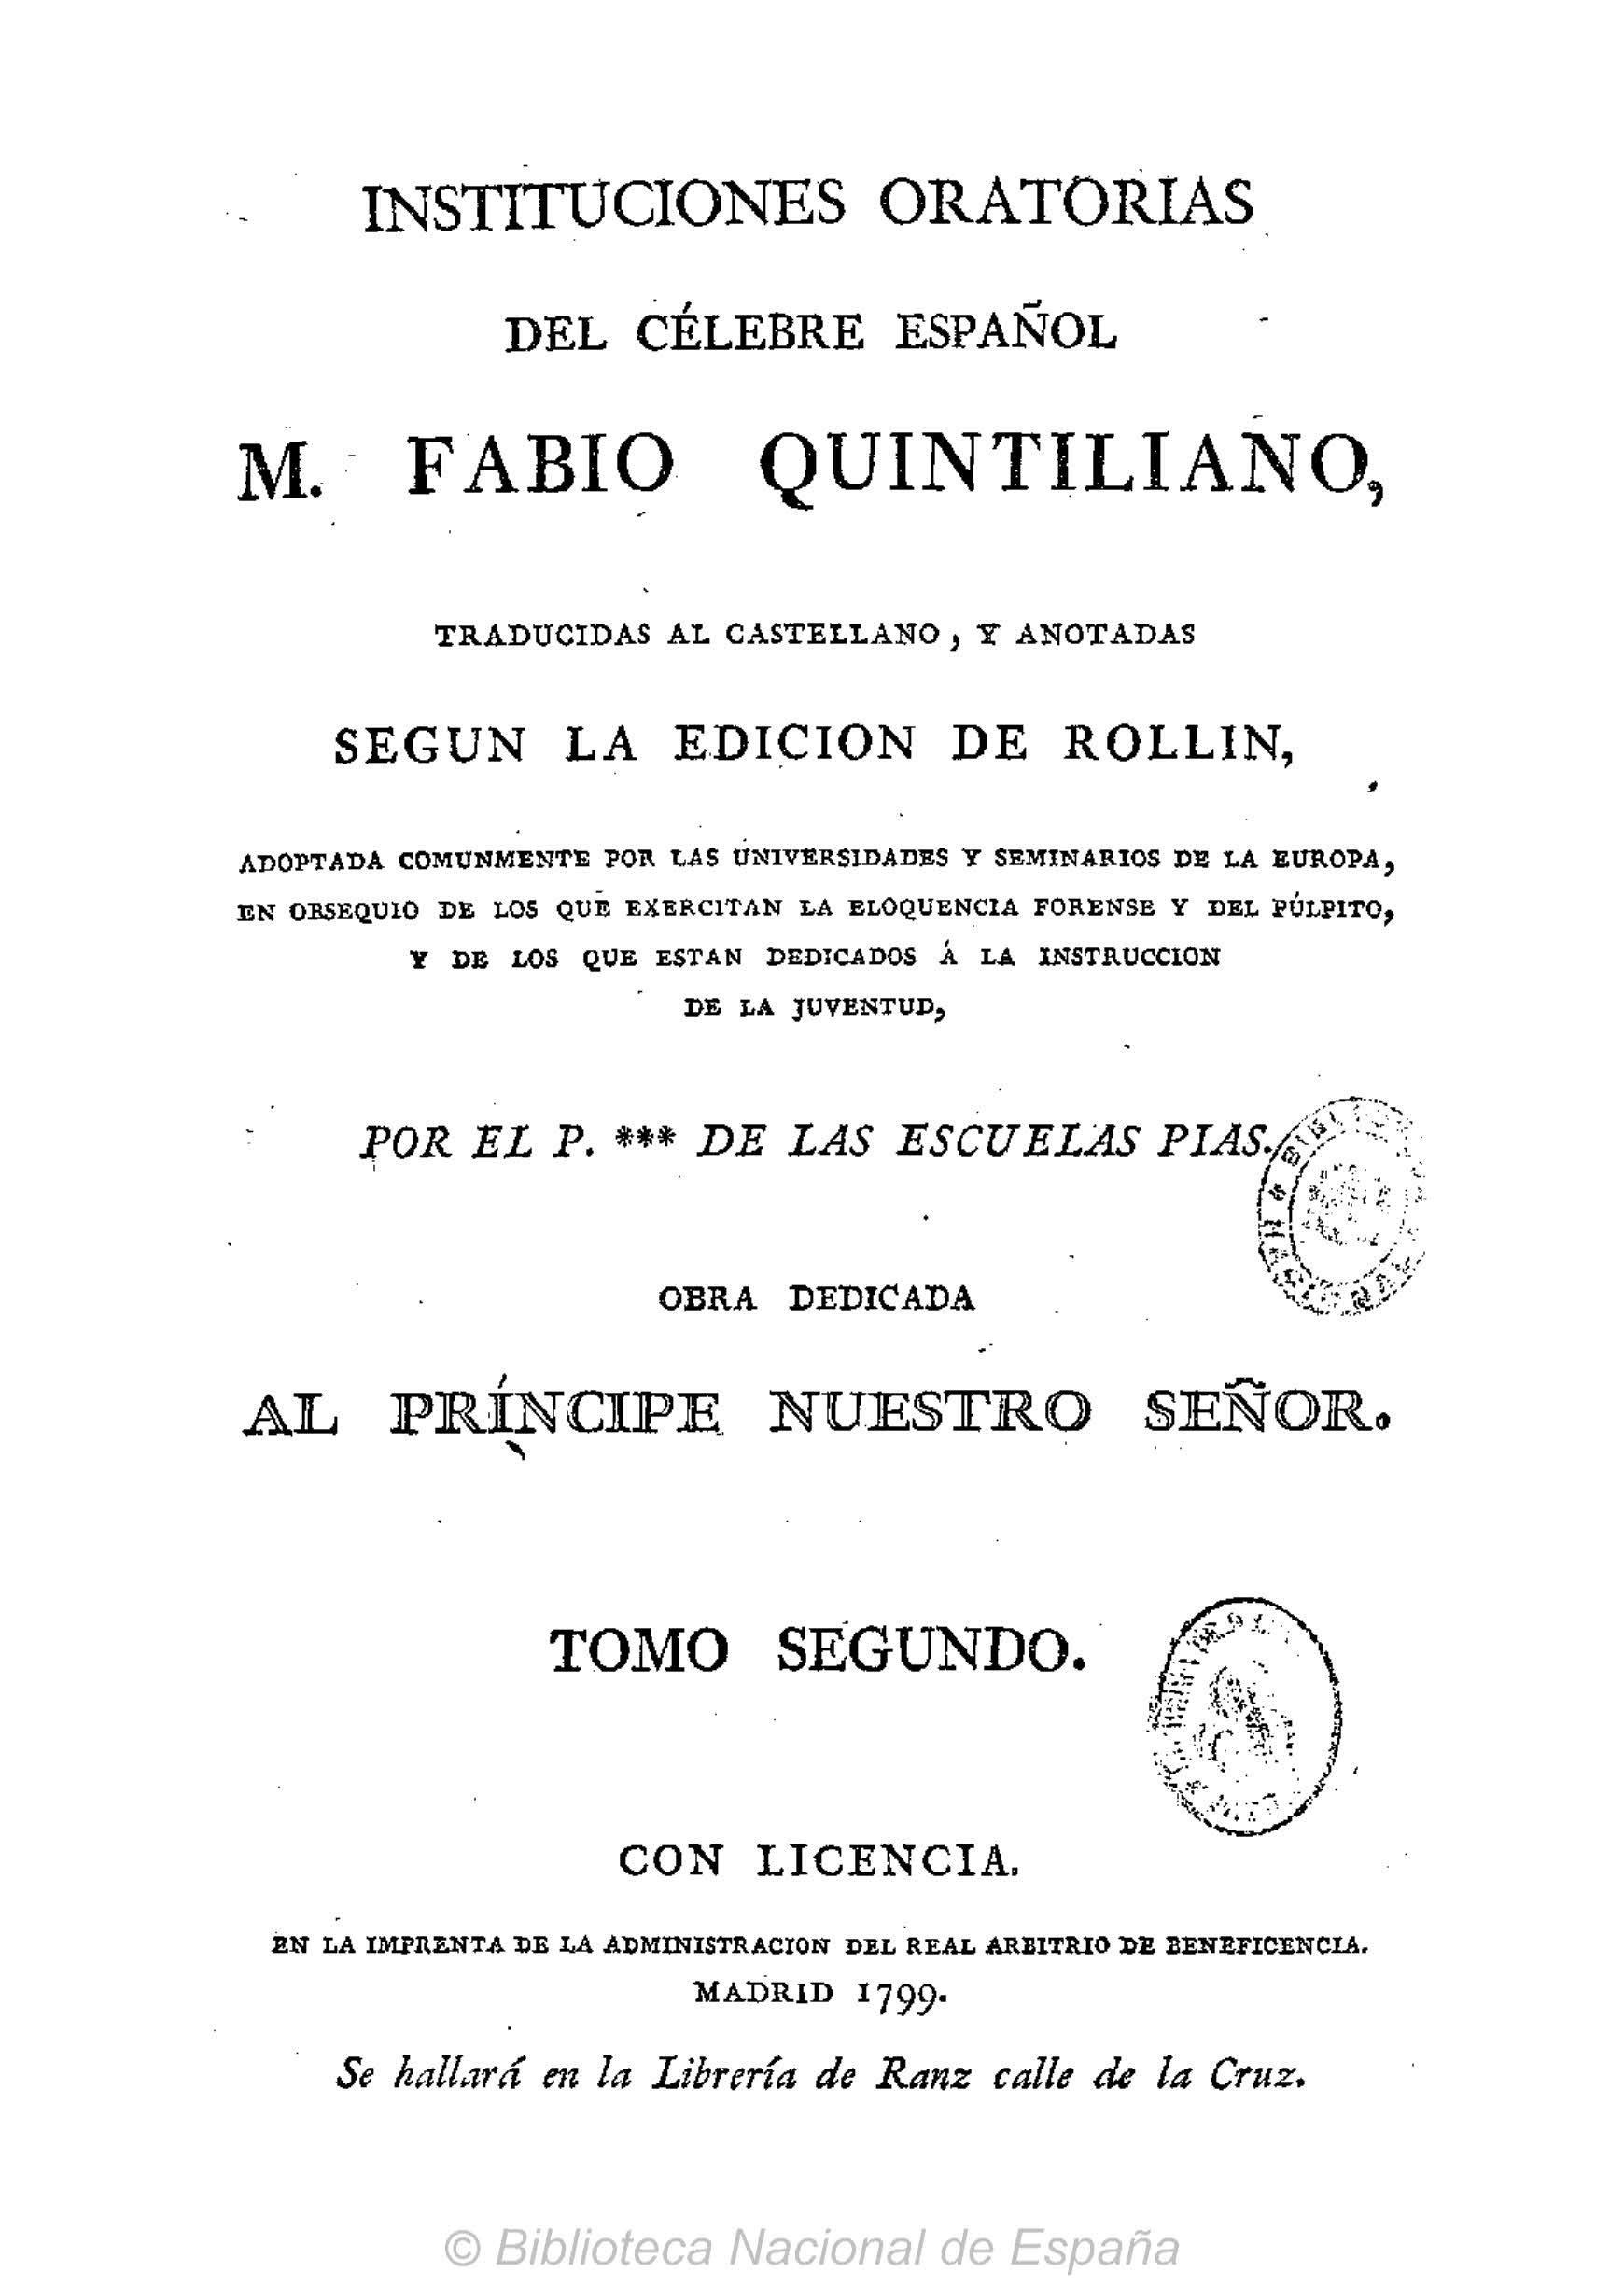 Instituciones oratorias del célebre español M. Fabio Quintiliano, Tomo II